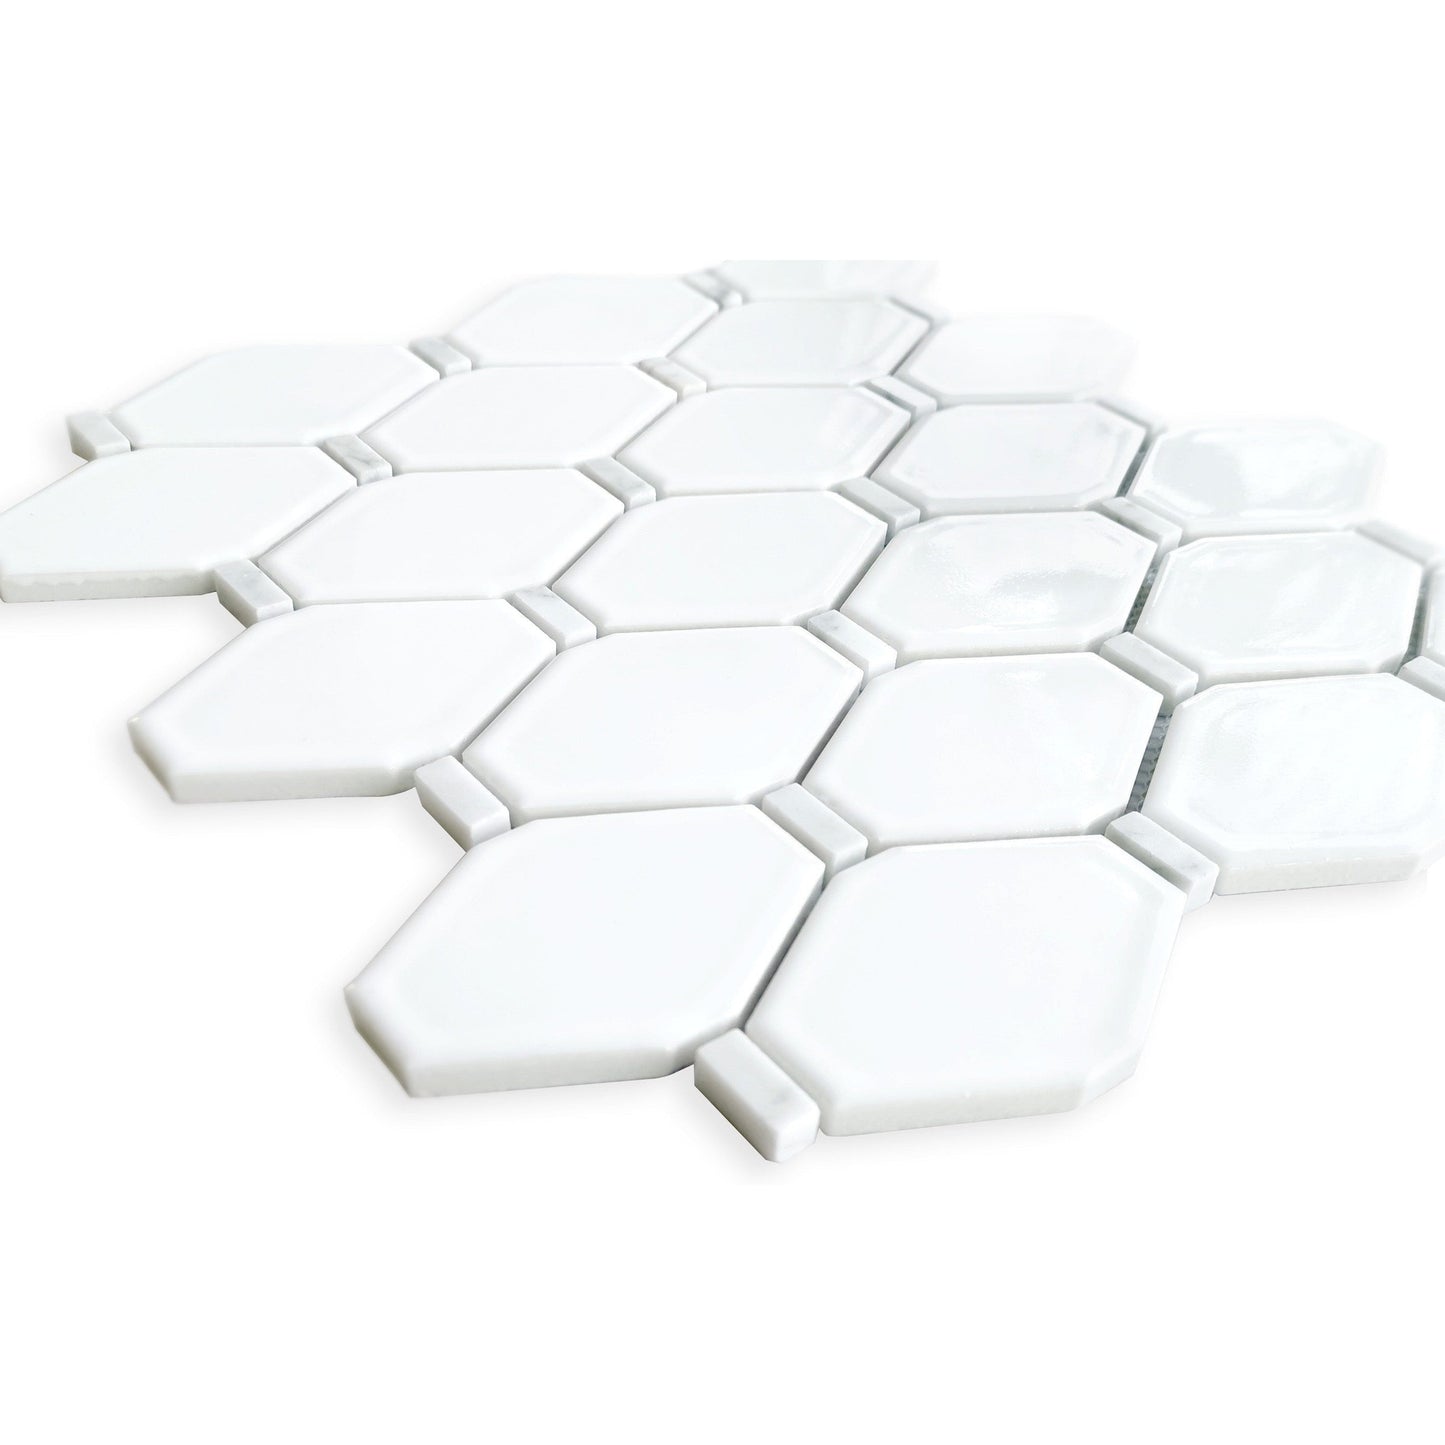 Altair Badajoz 11 pcs. Diamond White Glass Mosaic Floor and Wall Tile